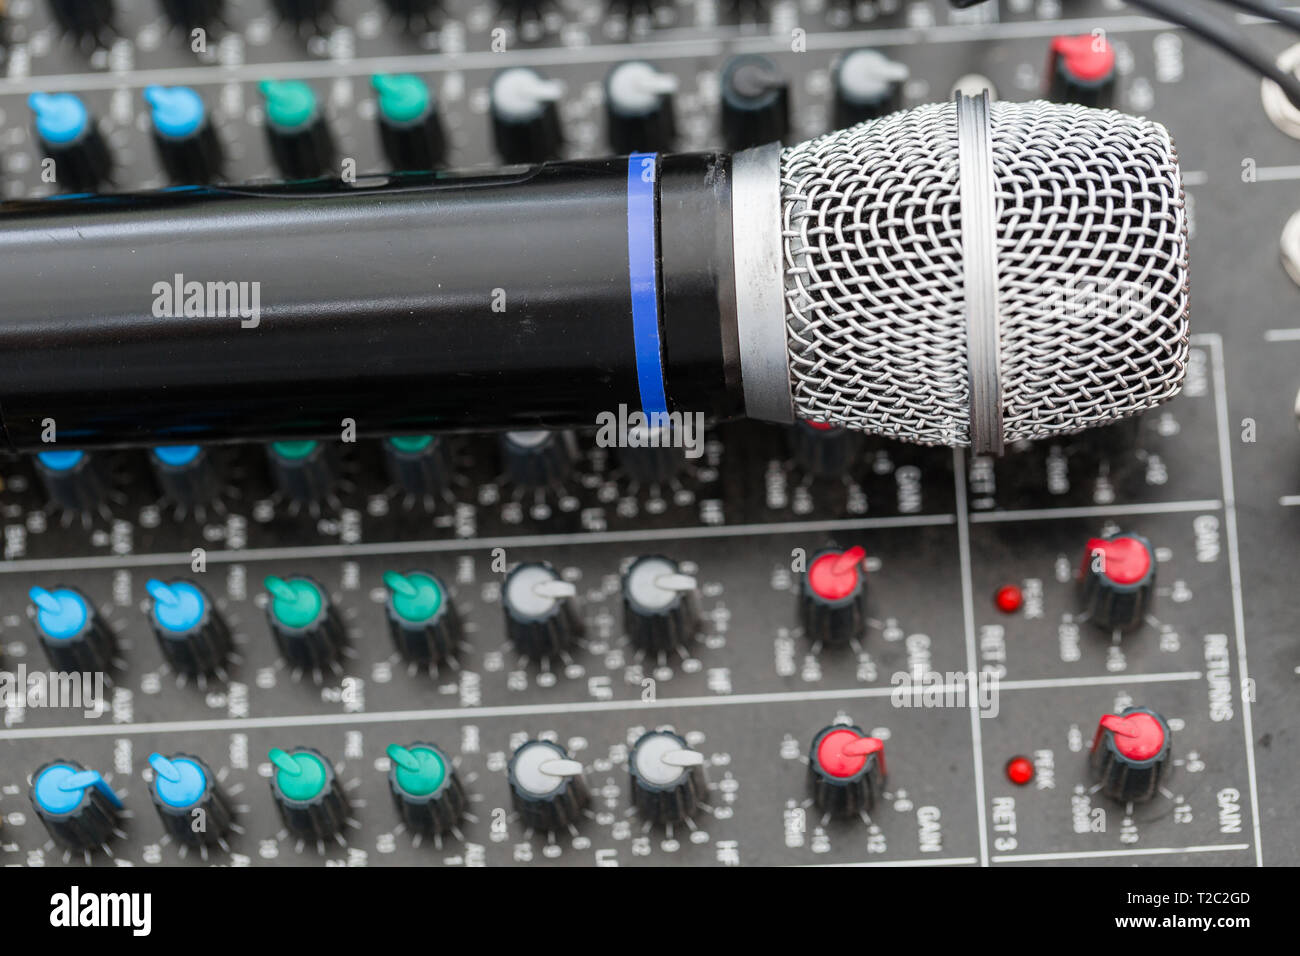 Mikrofon close-up. Fokus auf Mic. Event Konzept. Musik mixer Equalizer  Konsole für die Mixer der Soundkarte. Tontechniker audio mixer Equalizer  Stockfotografie - Alamy